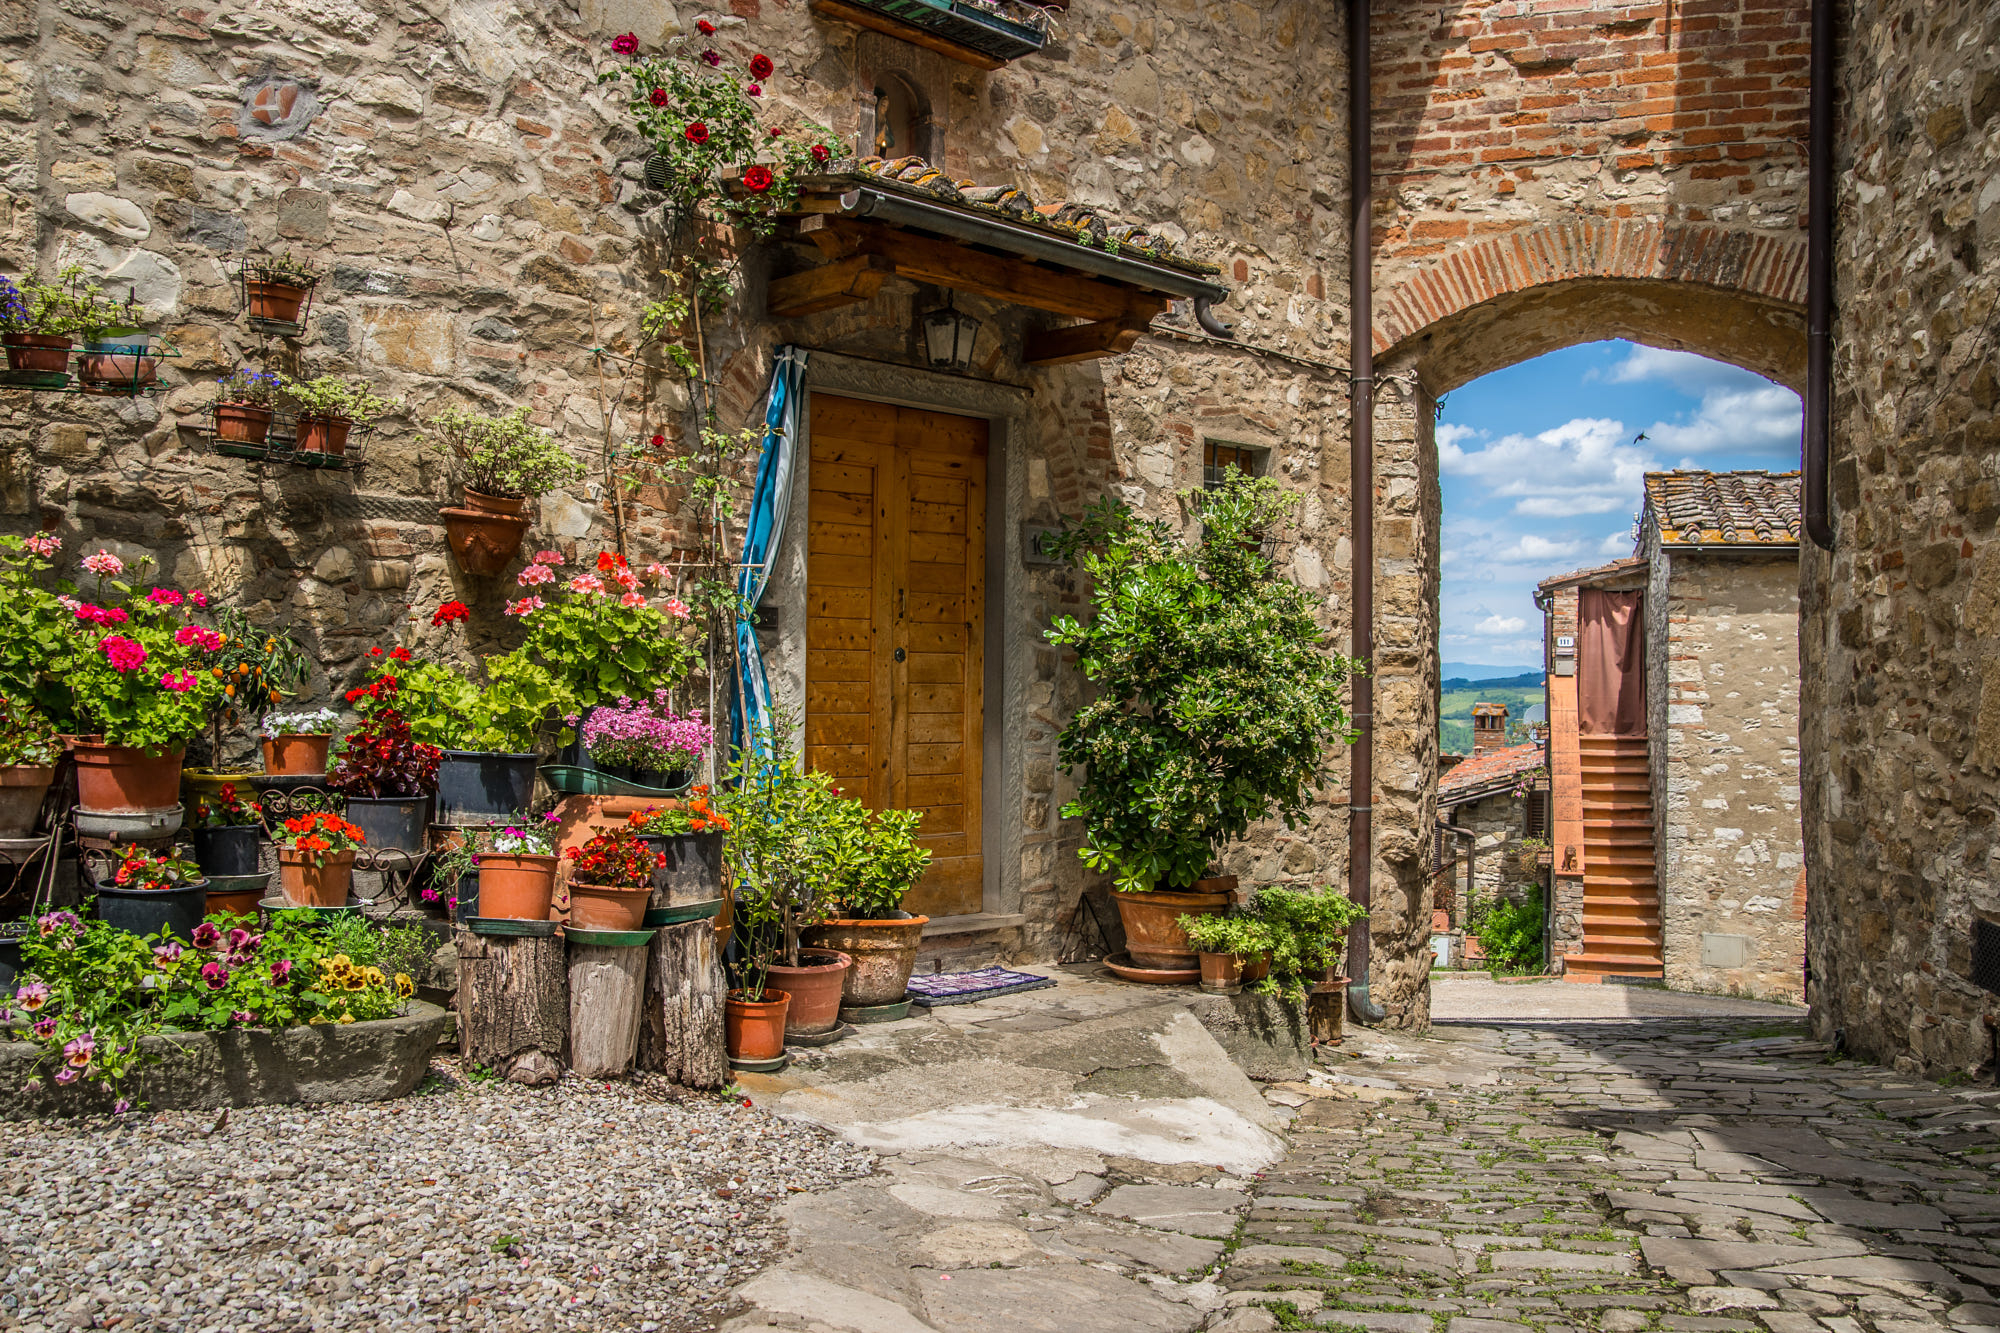 2000x1333 Wallpaper : Tuscany, stone, house, plants, summer, flowers, wood, door, stones DayWalk3r1988 1686247 HD Wallpapers